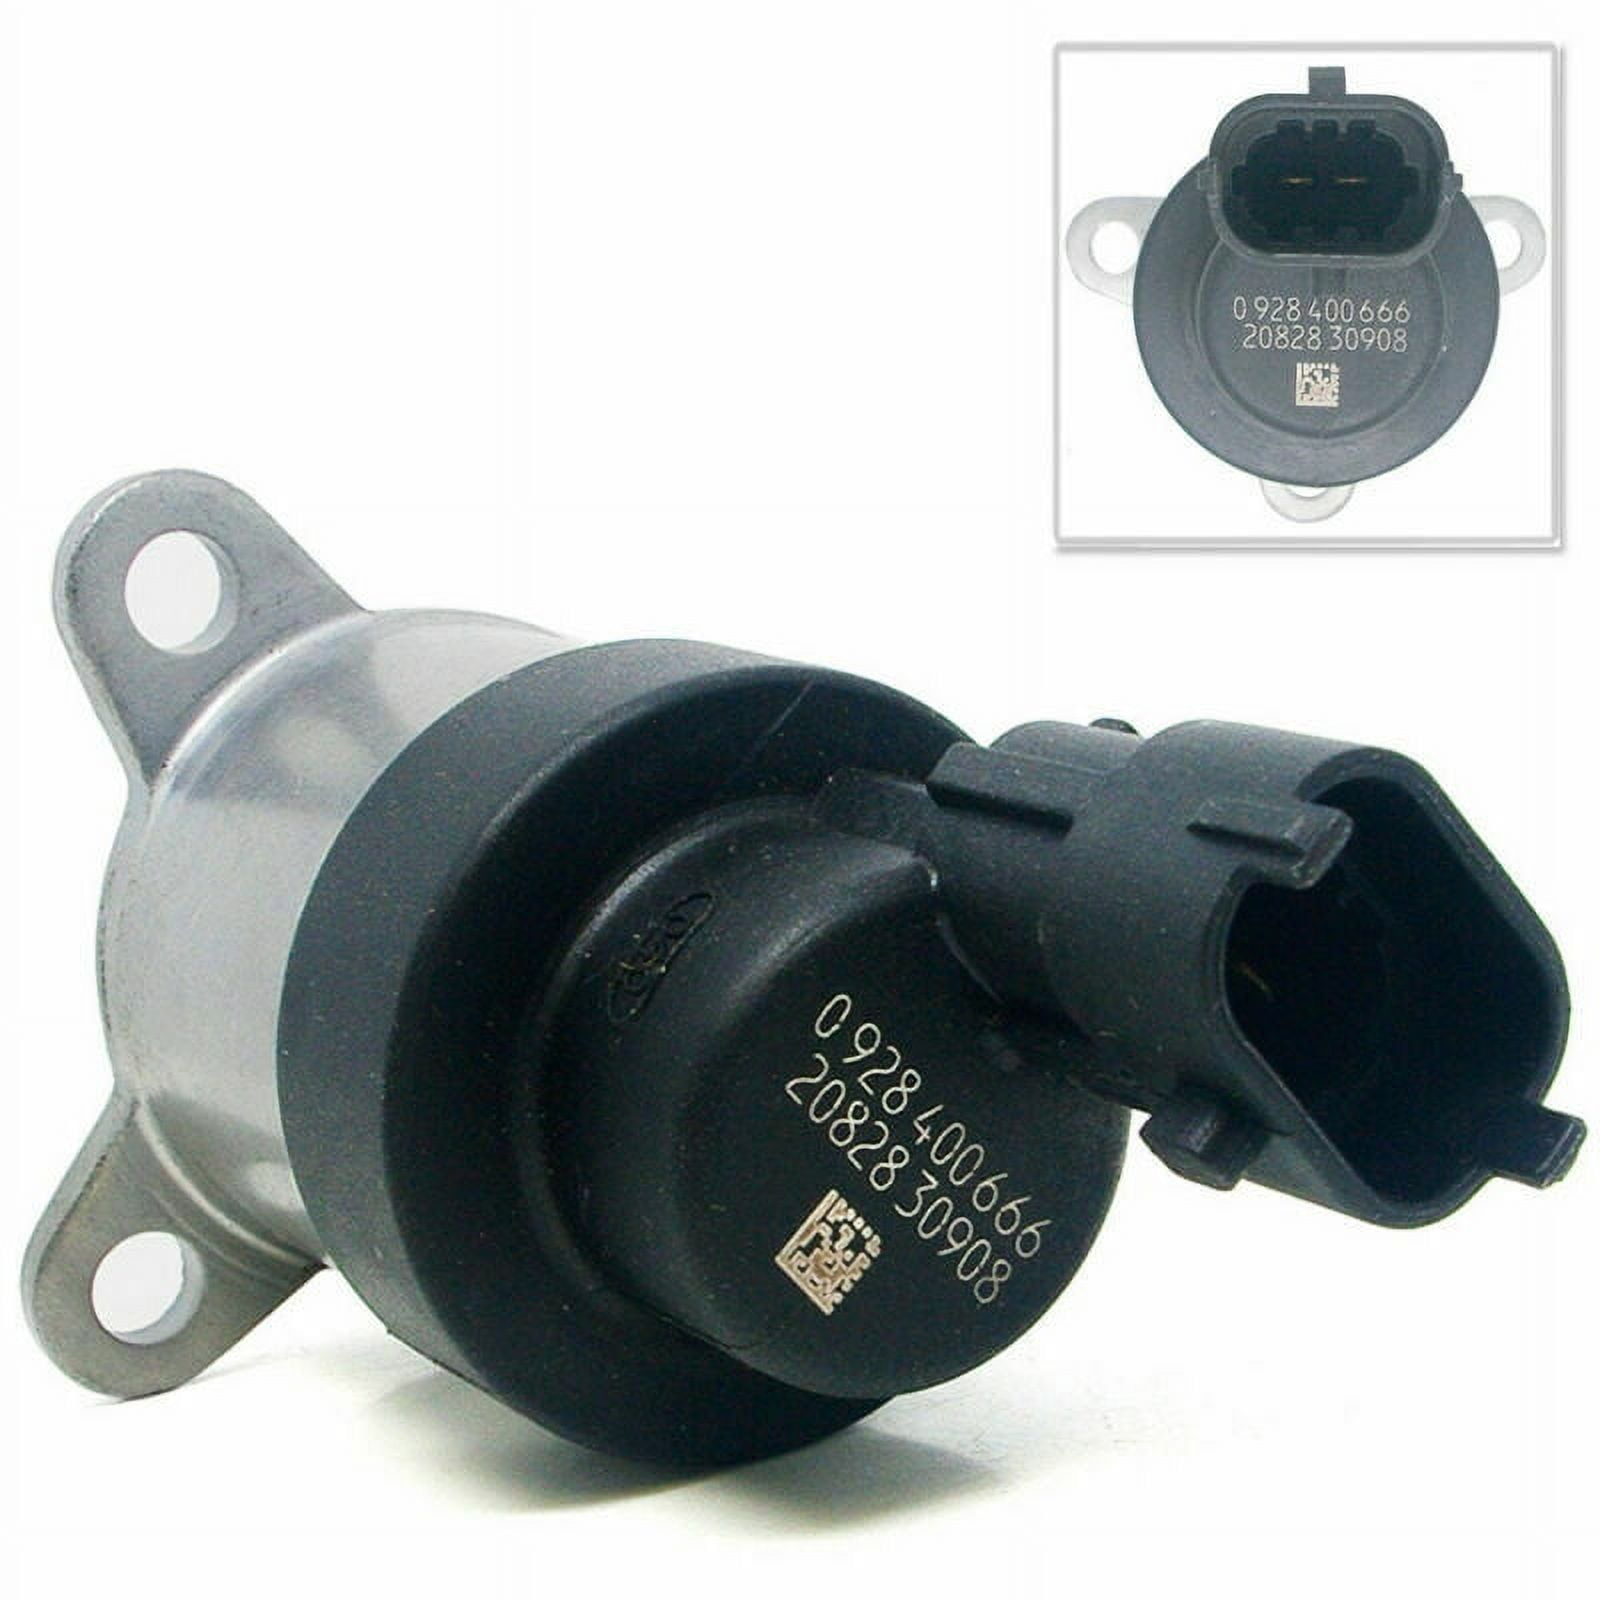 Bosch Fuel Pressure Regulator 0928400666